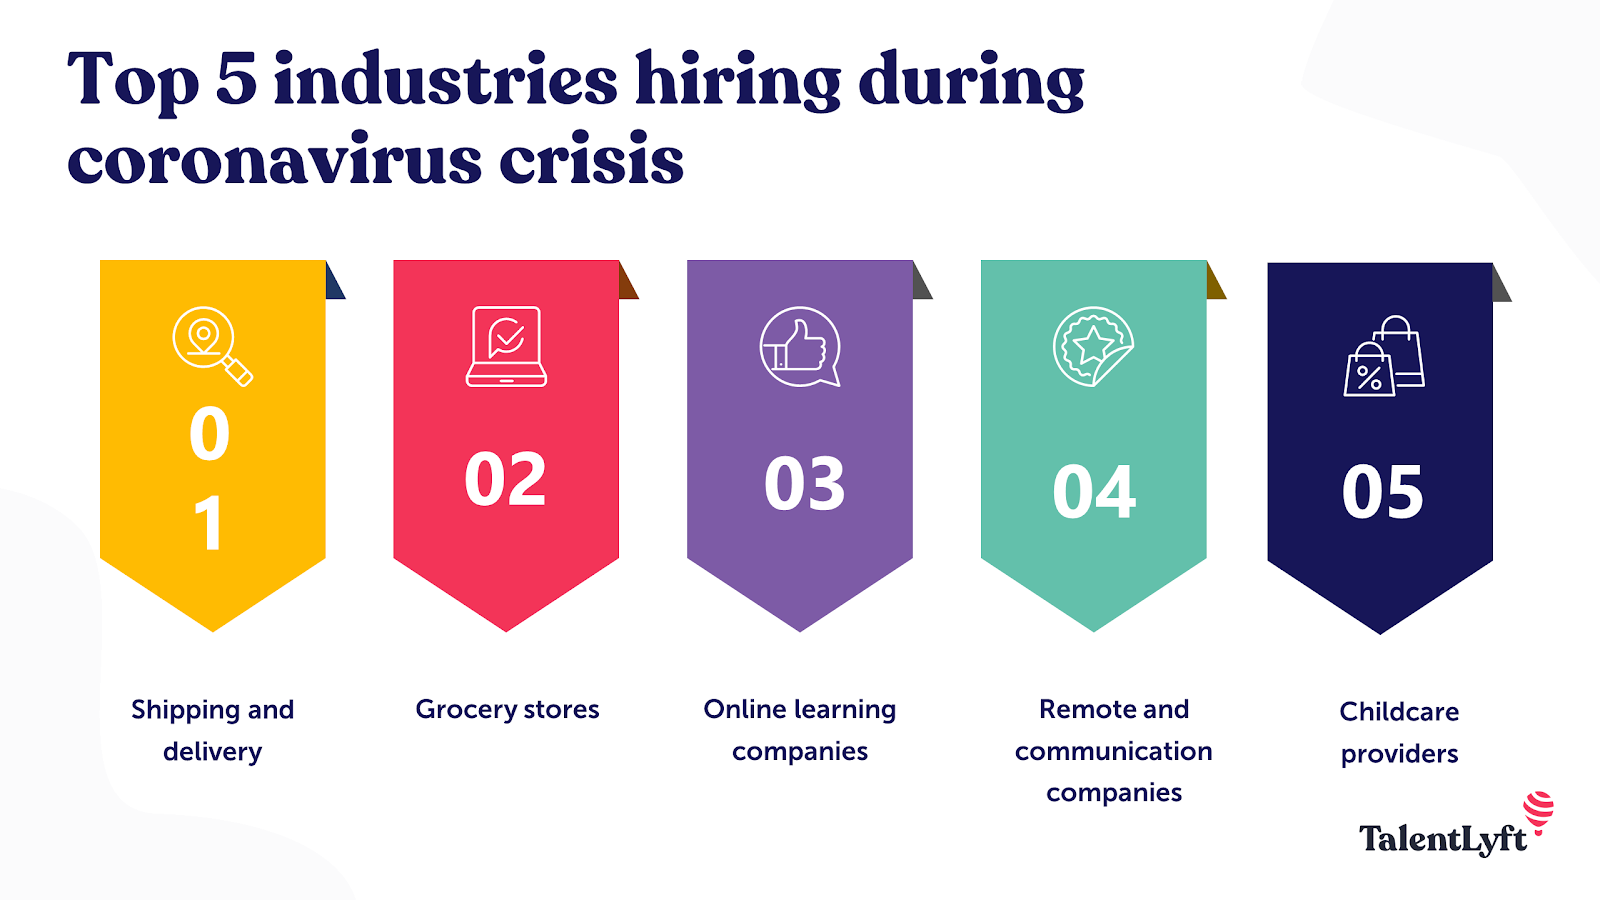 Top 5 industries hiring during coronavirus crisis